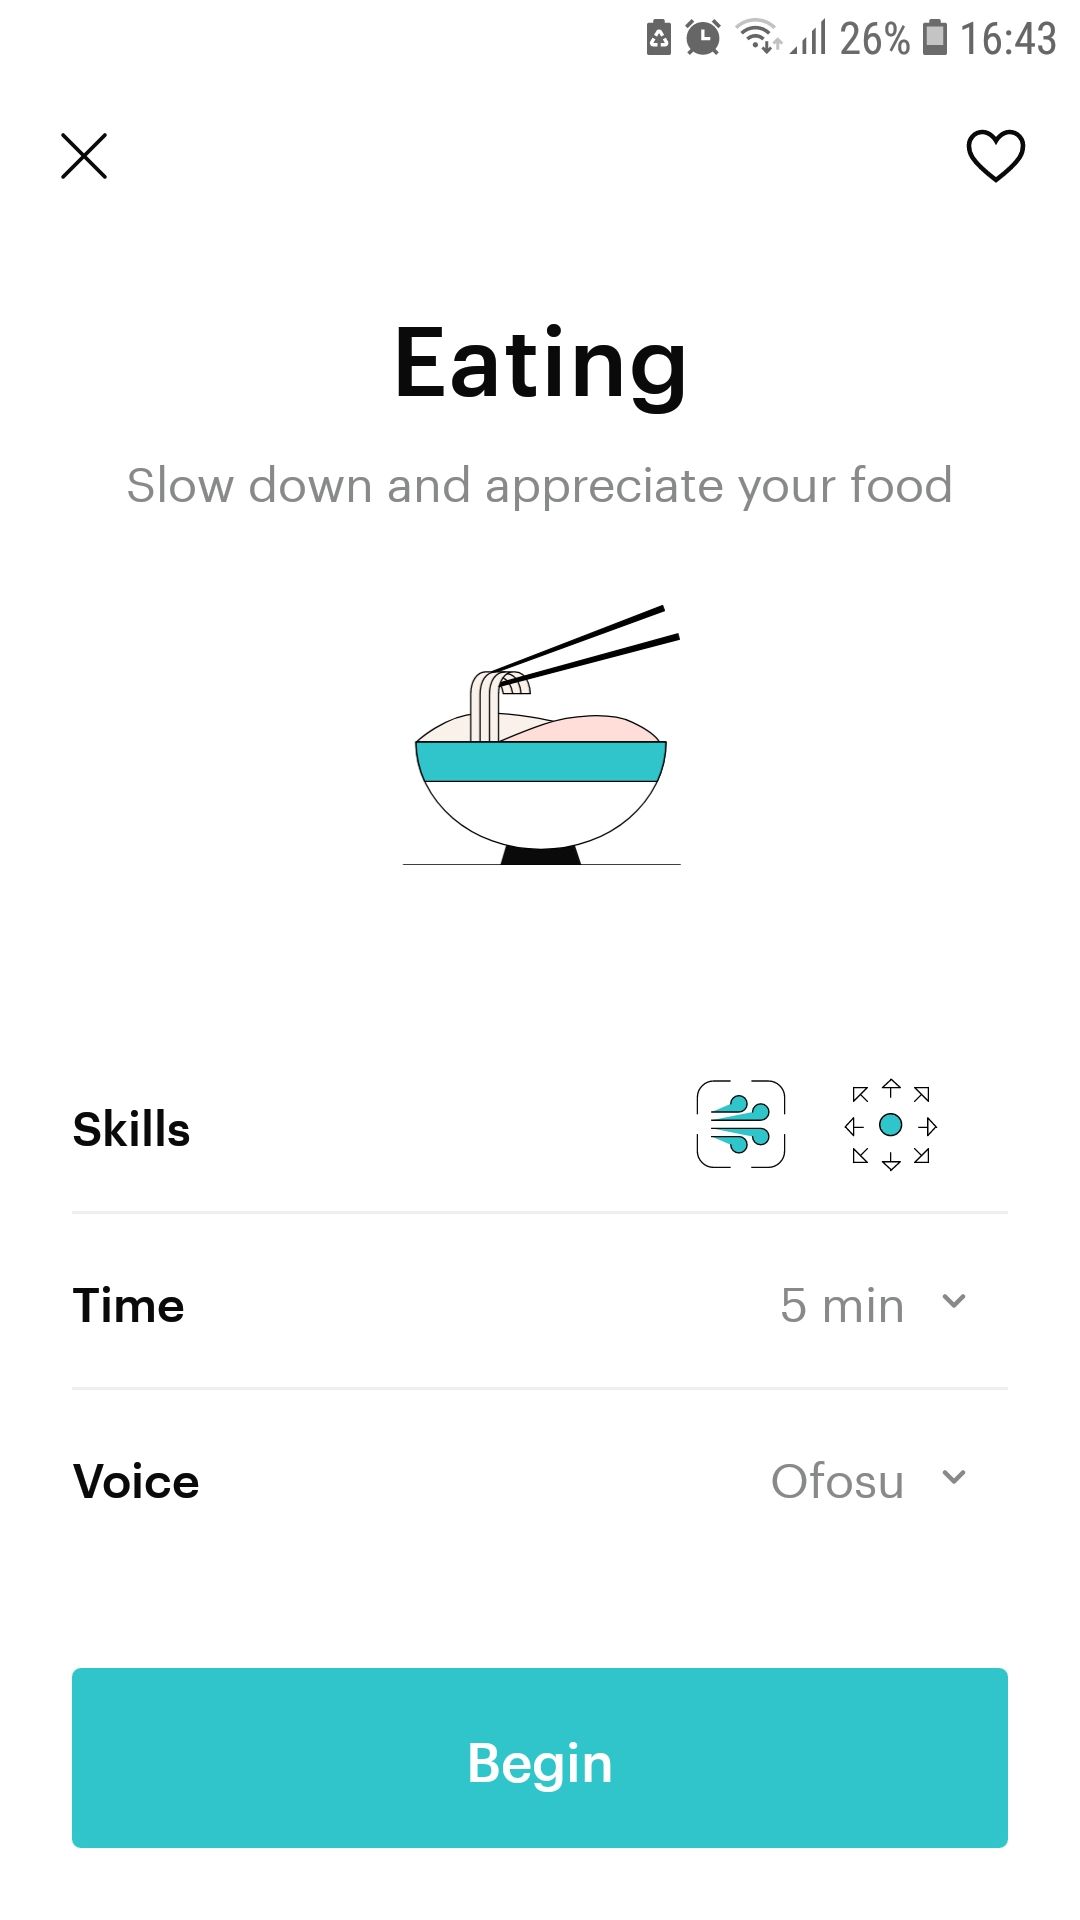 Balance mobile meditation app eating